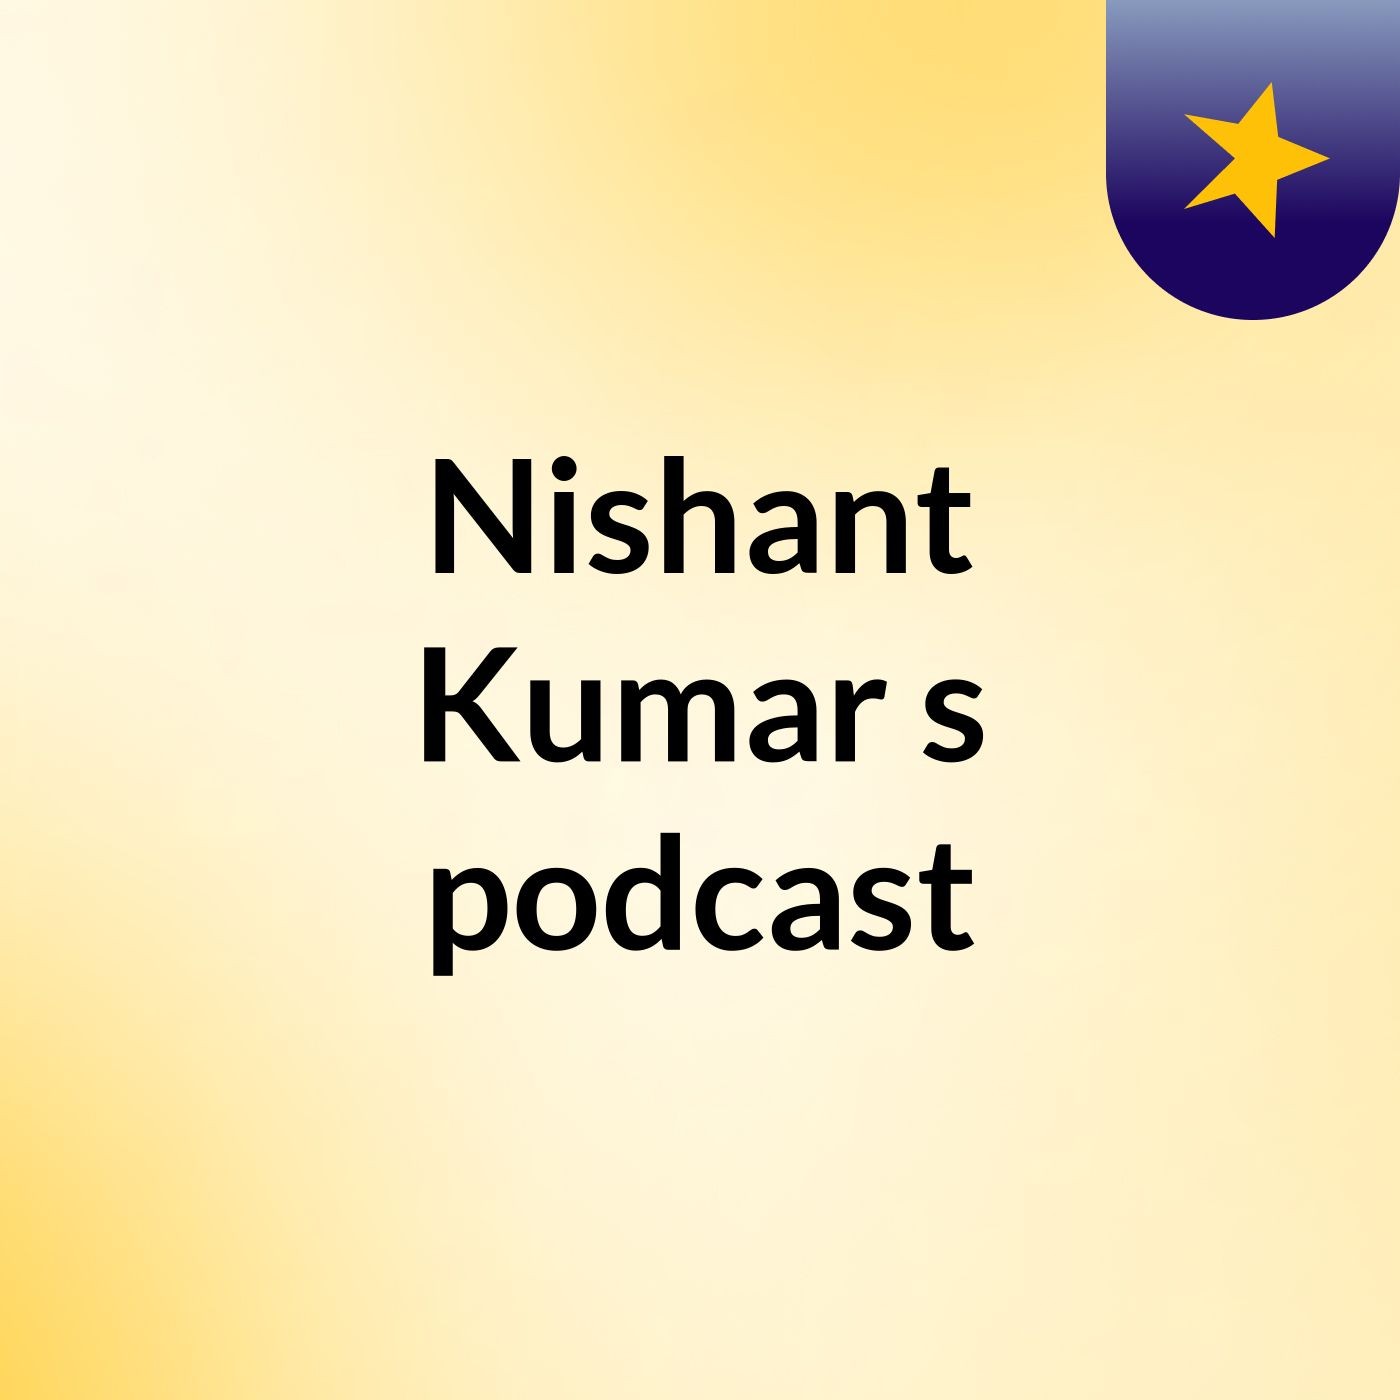 Nishant Kumar's podcast